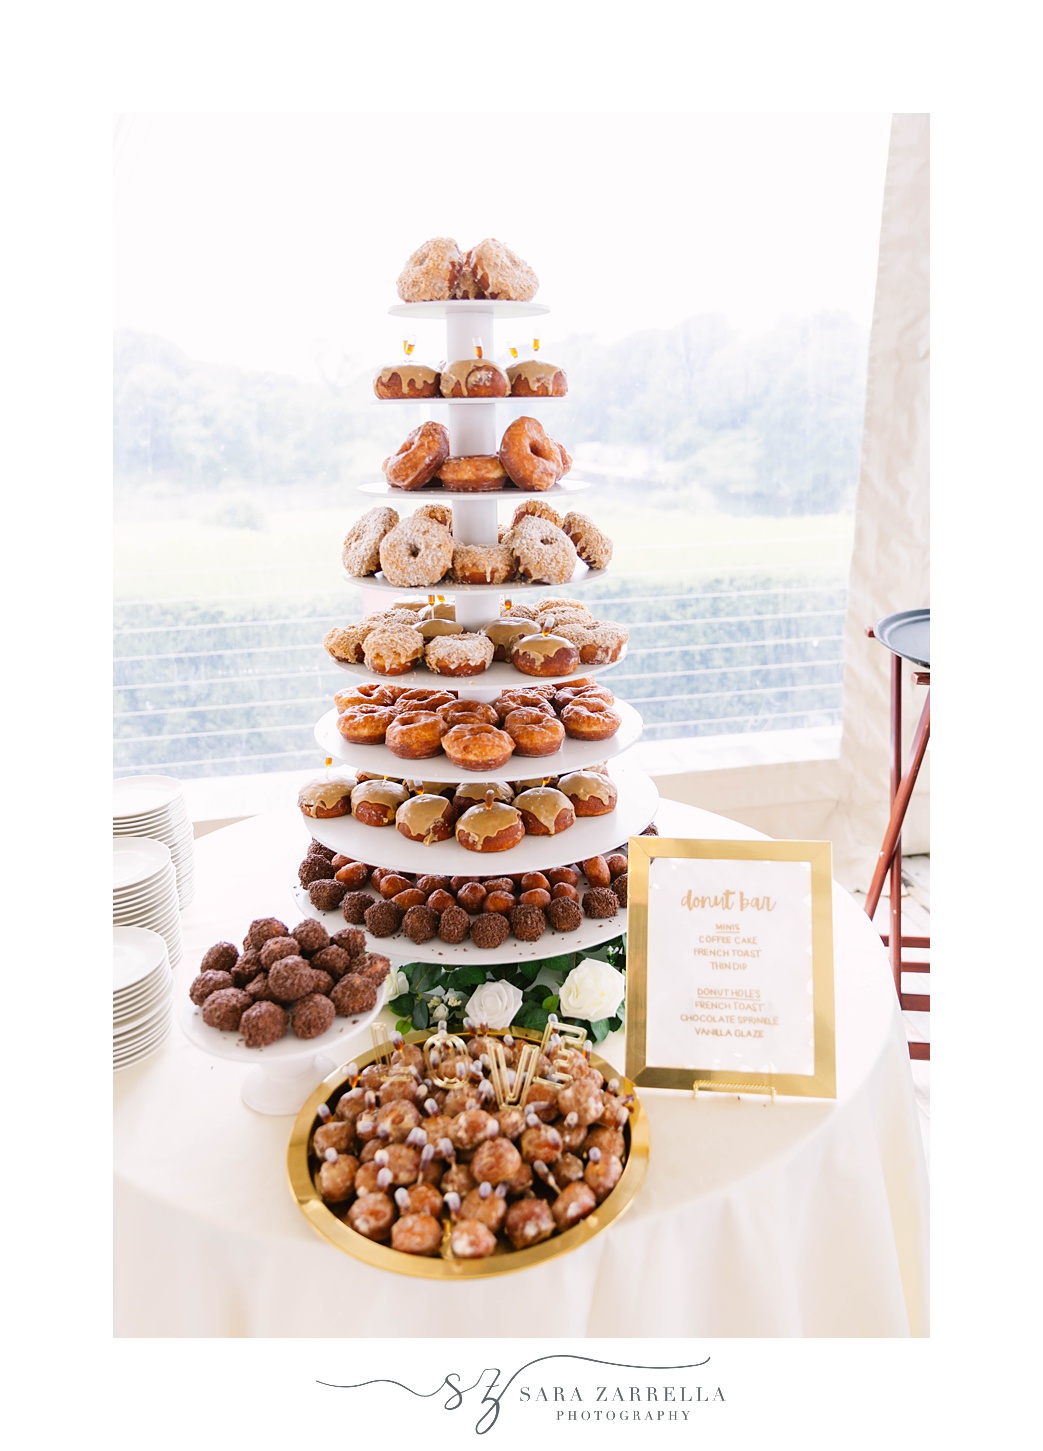 donut bar for OceanCliff Hotel brunch wedding reception